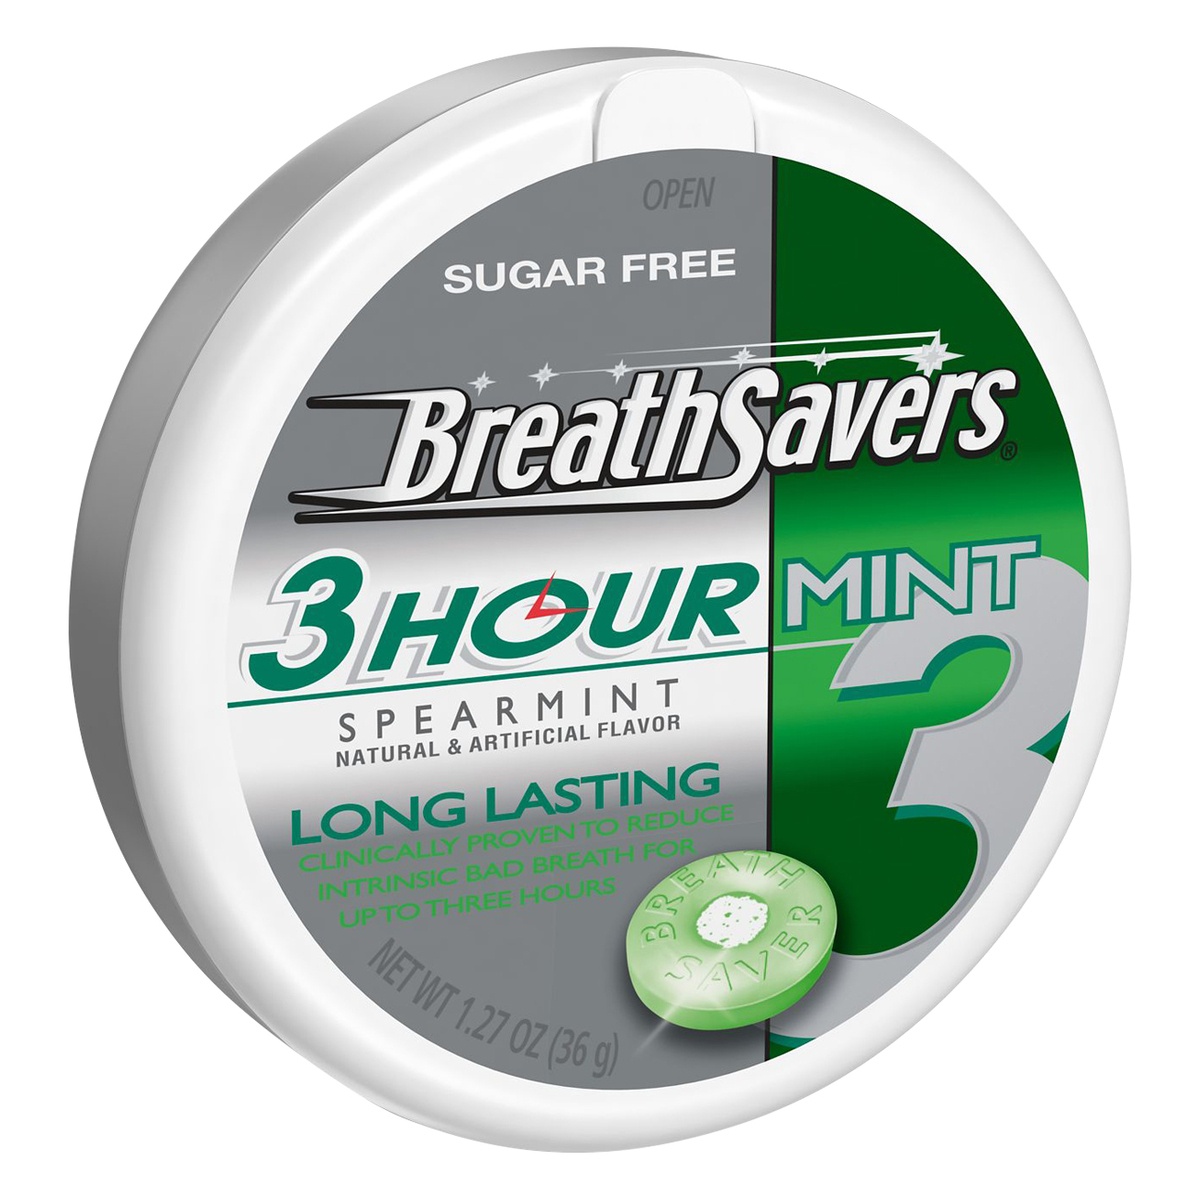 slide 2 of 7, breath savors Spearmint 3 Hour Mint, 1.27 oz